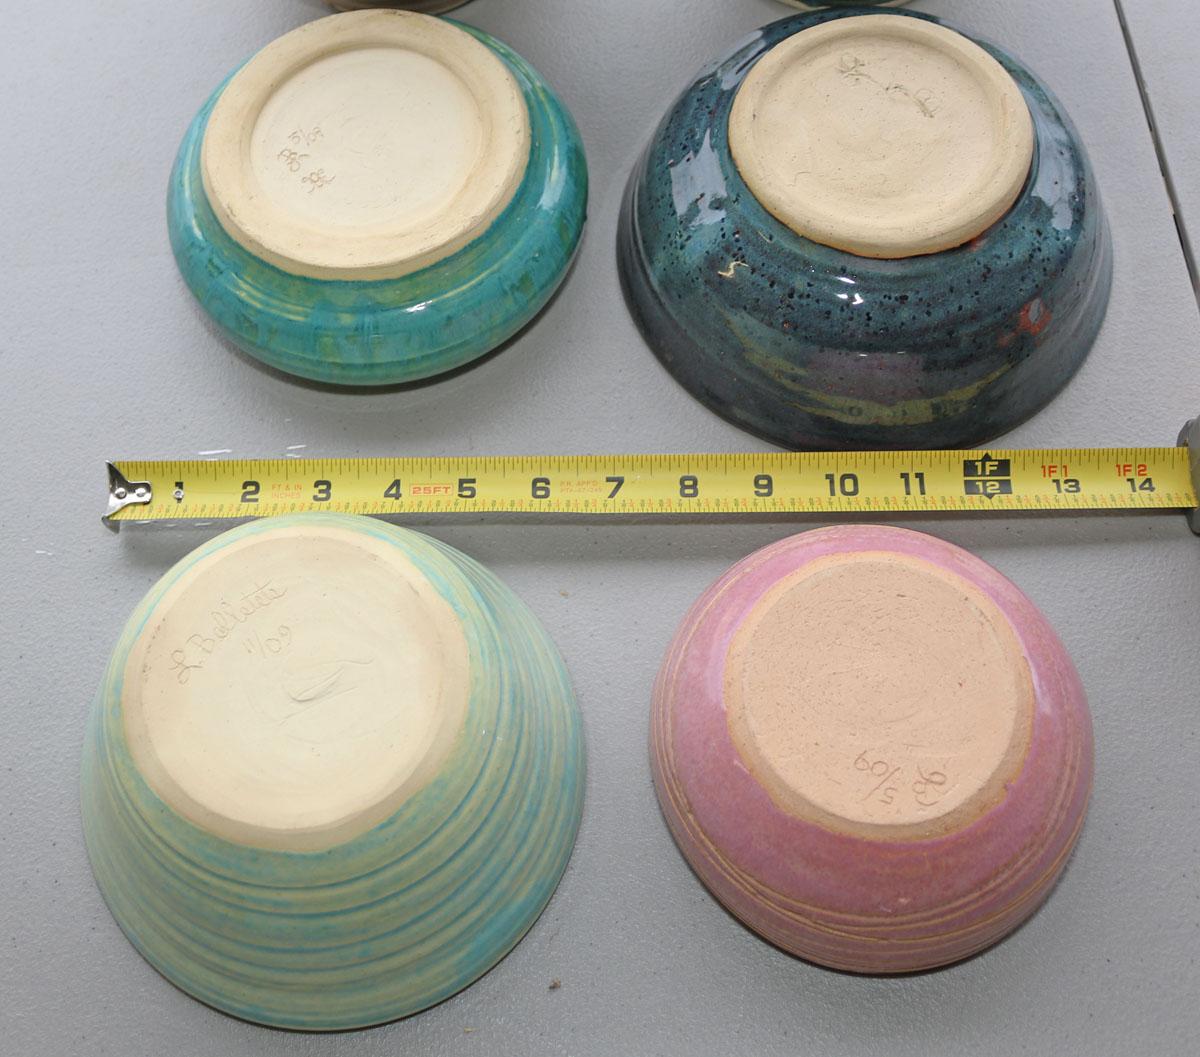 Ceramic Pottery